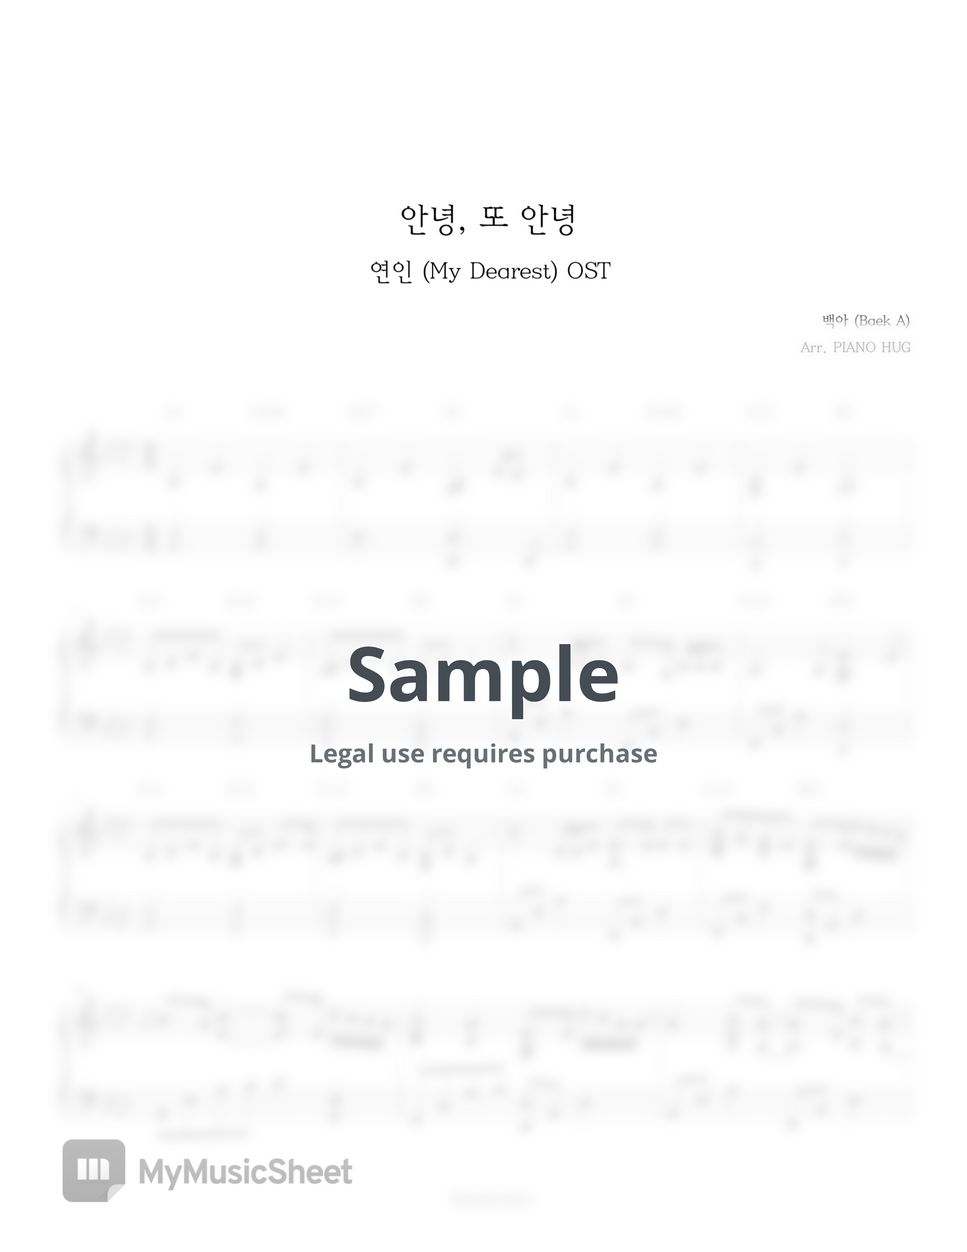 Baek A (백아) - 안녕, 또 안녕 (My Dearest OST) by Piano Hug